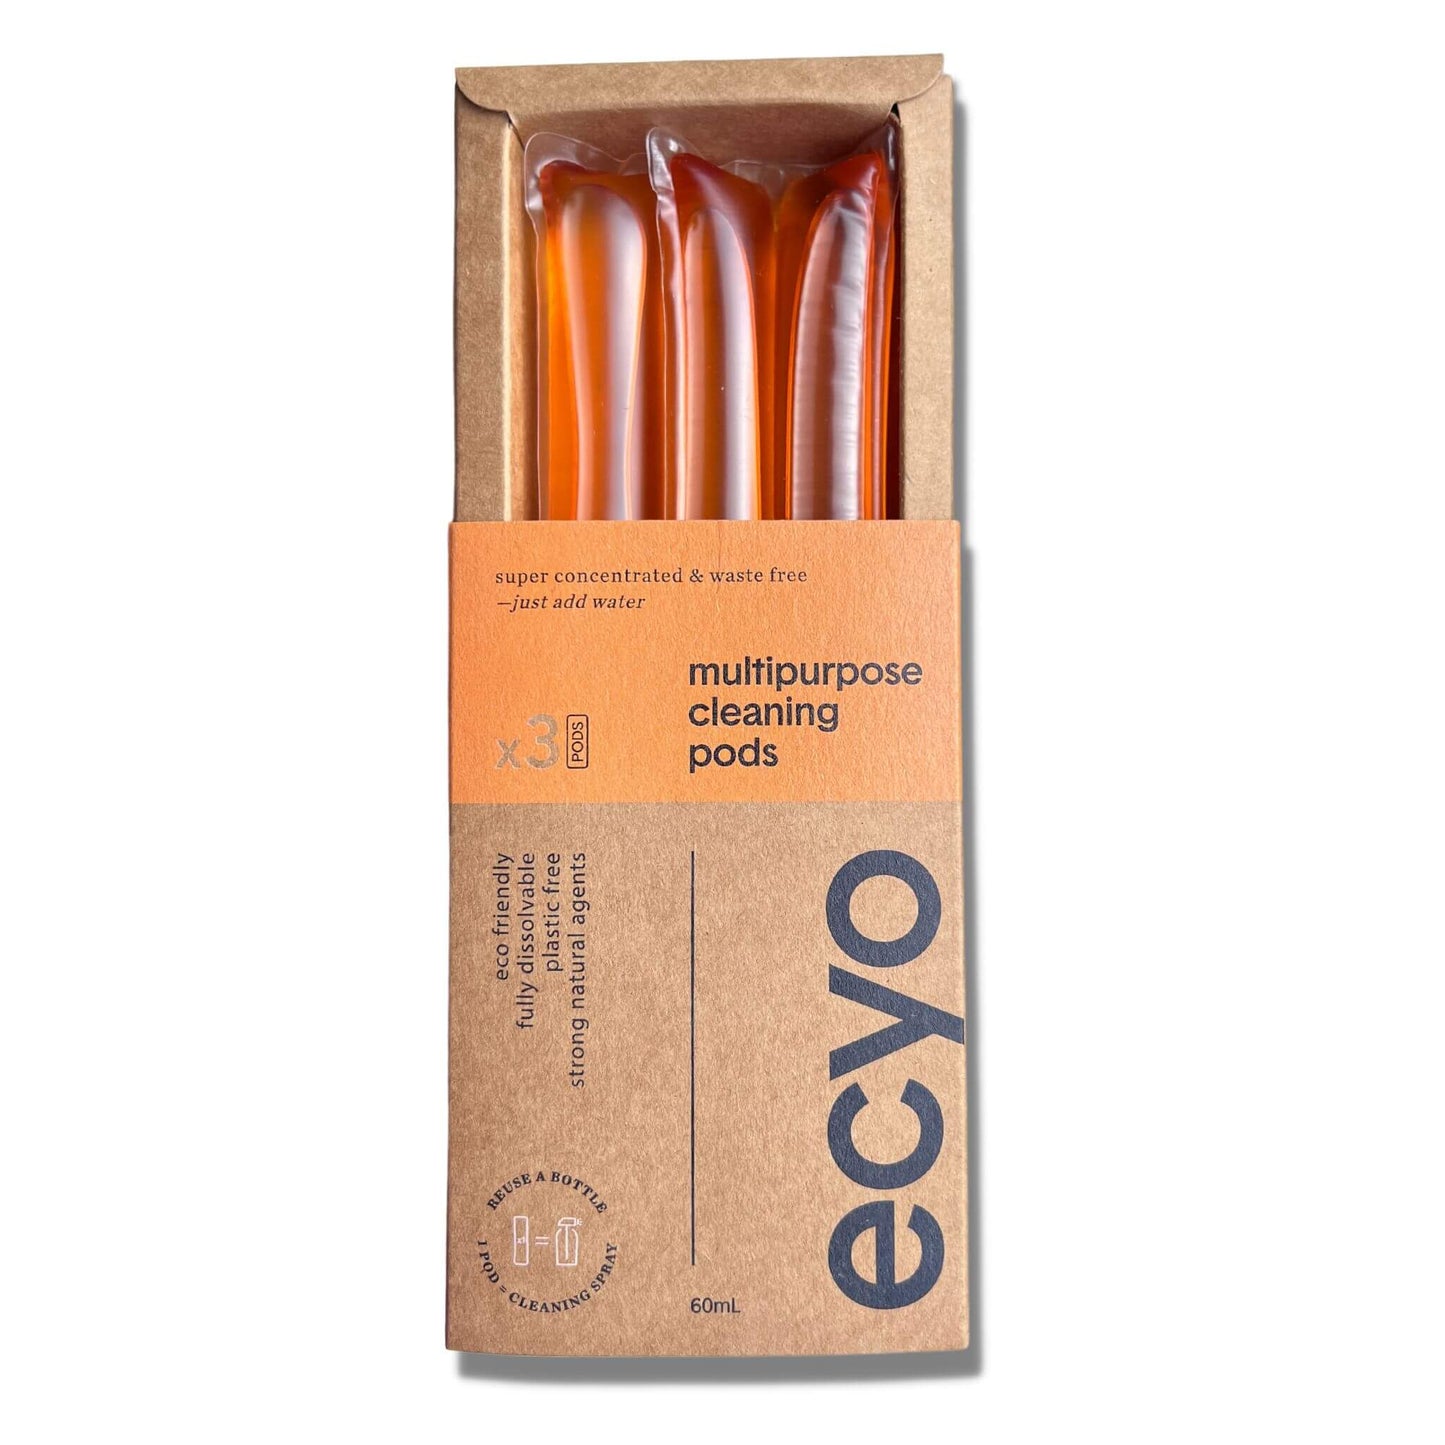 ecyo multipurpose cleaning pods - x 3 open box